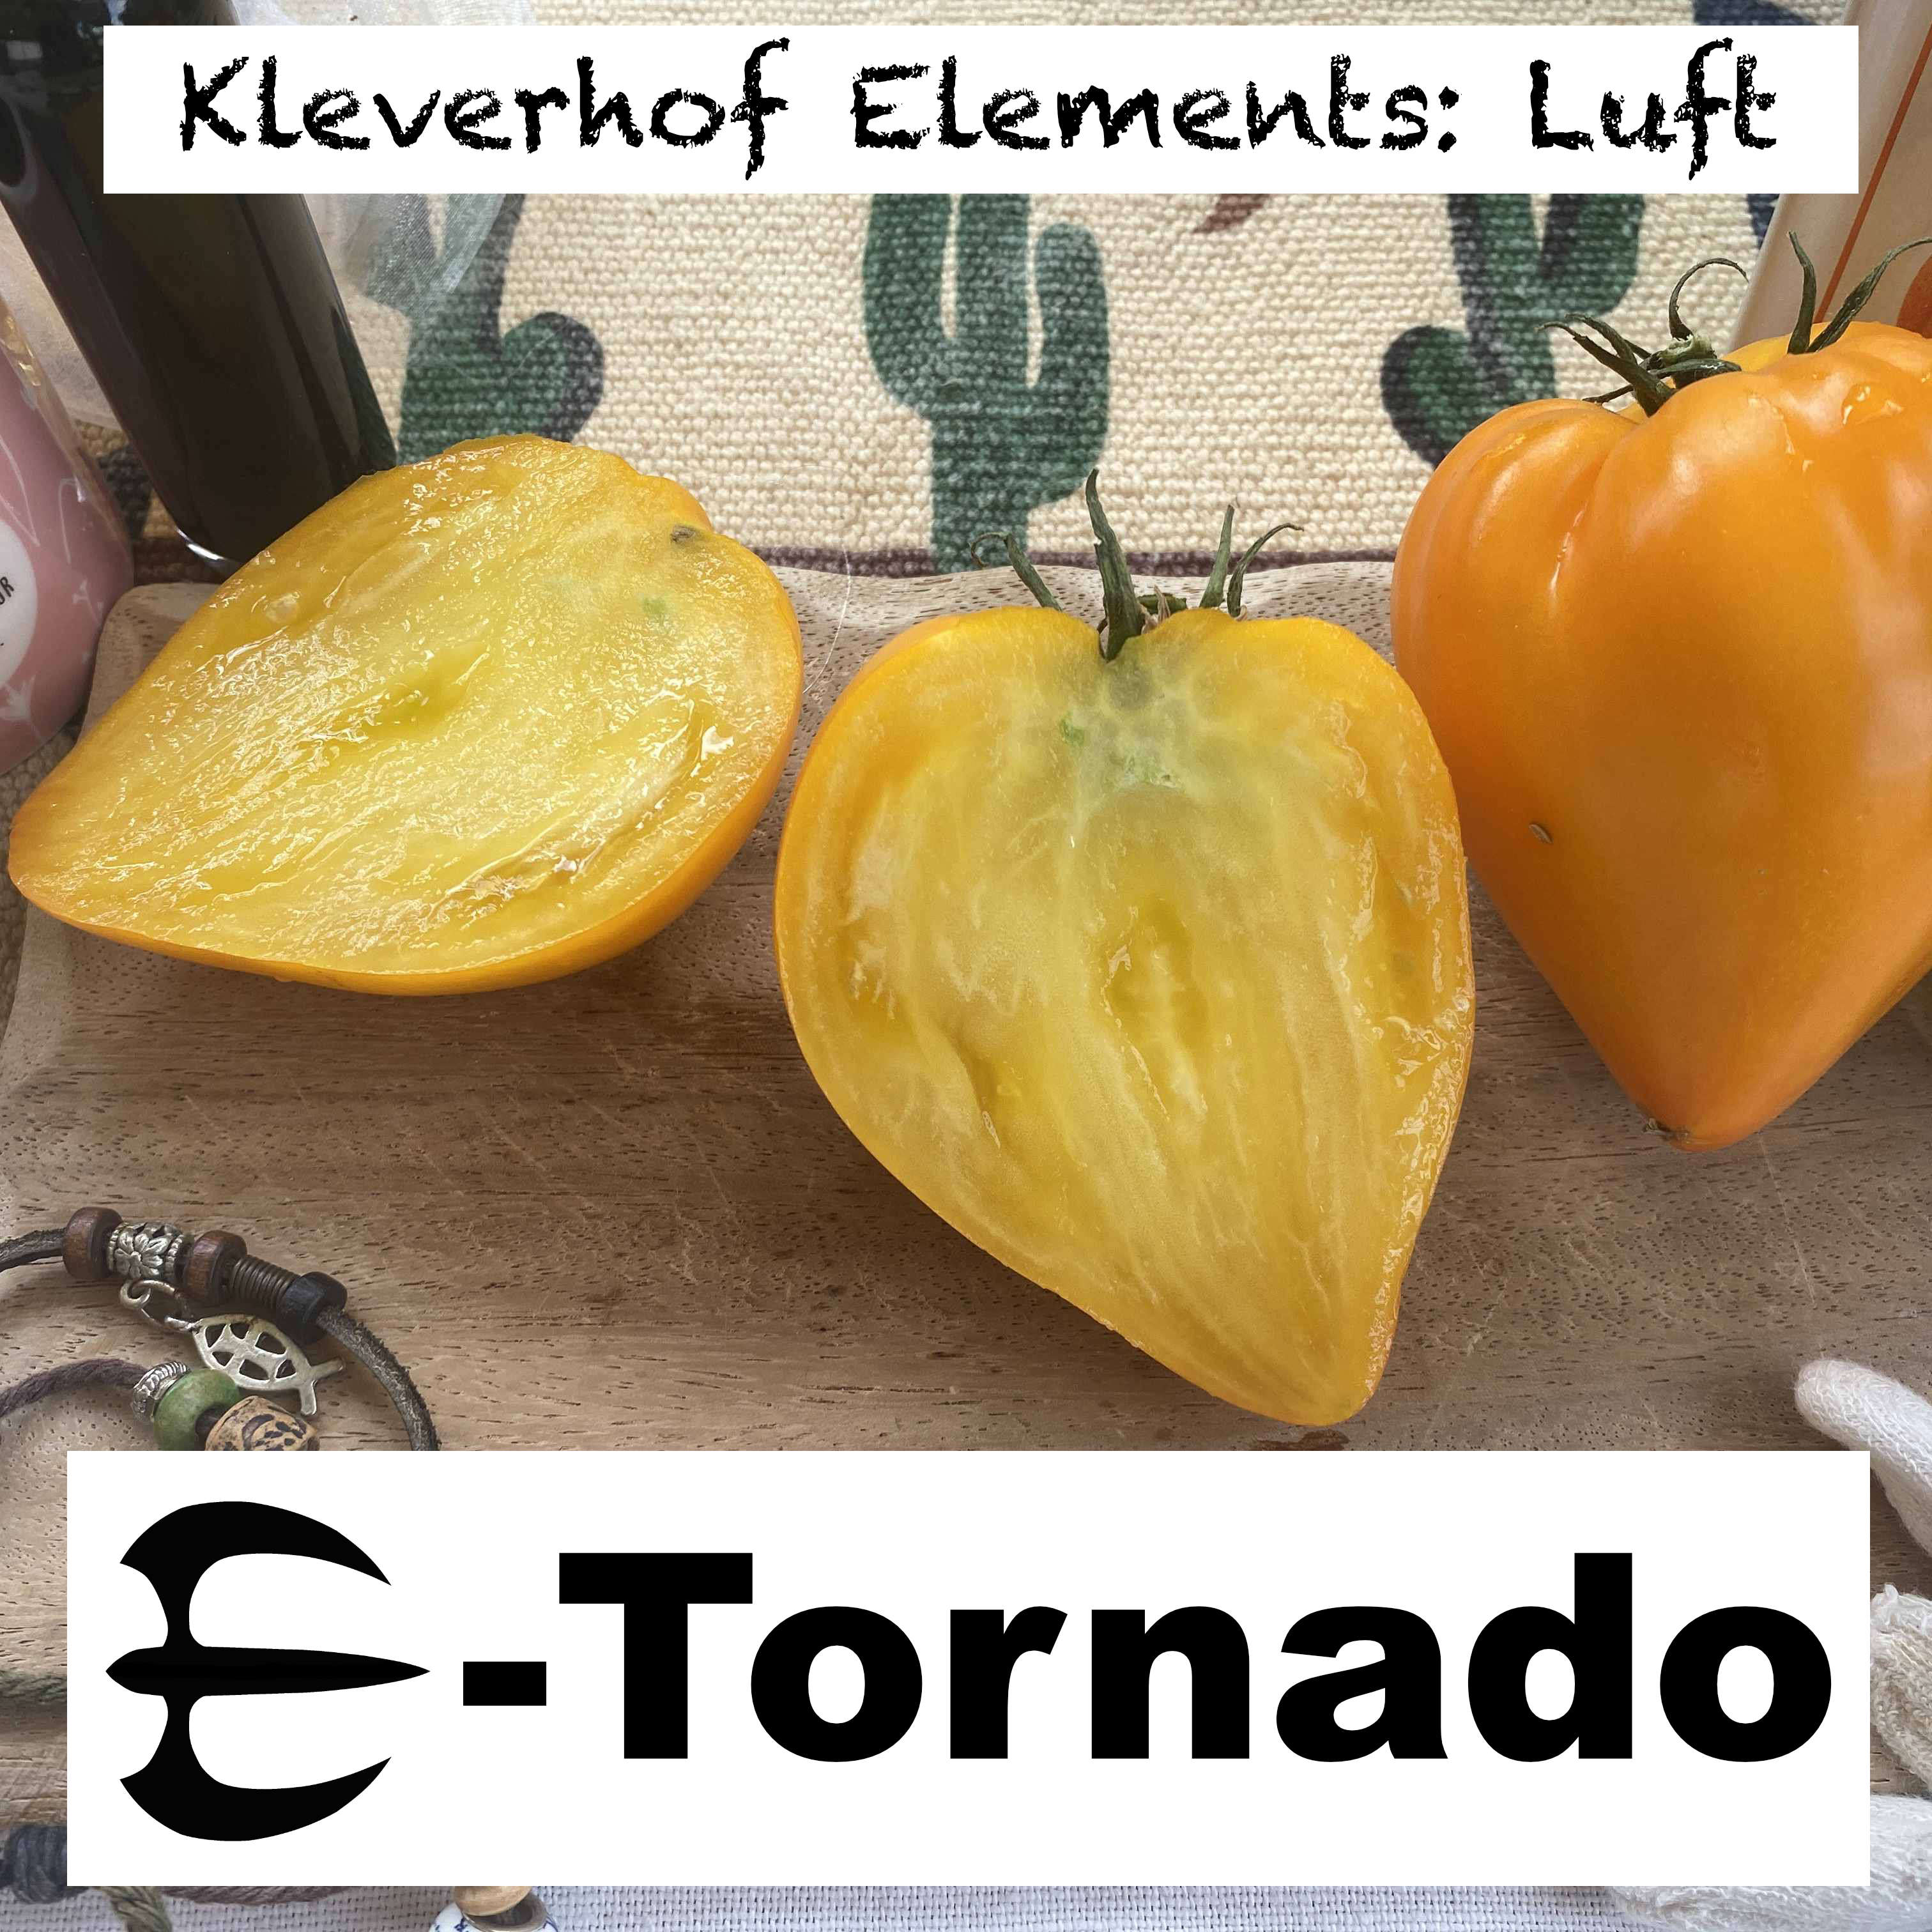 Tomatensaatgut E-Tornado